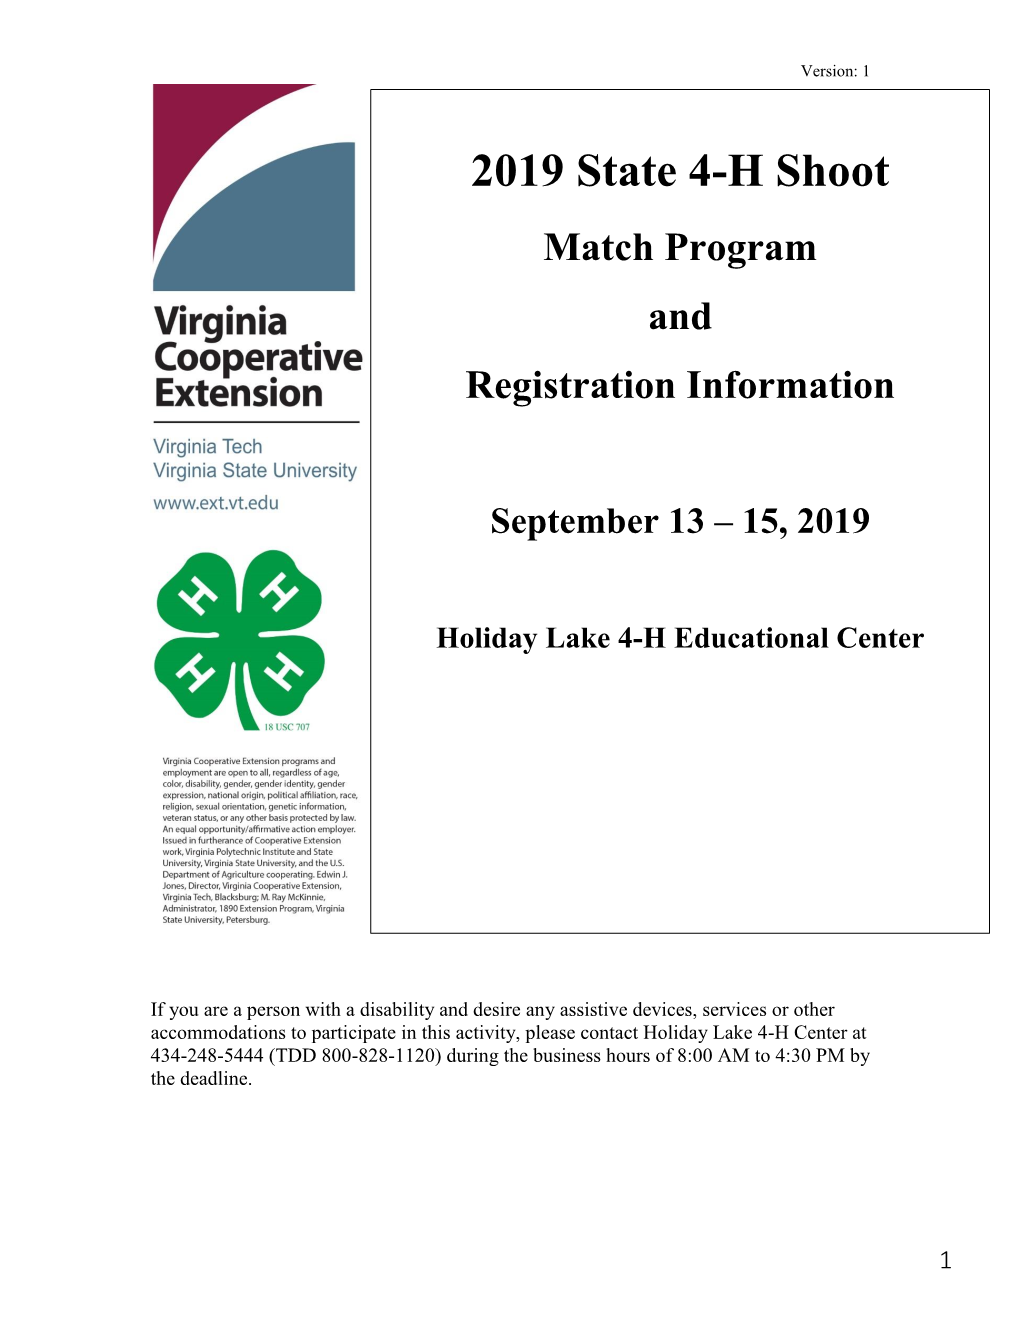 2019 State 4-H Shoot Match Program and Registration Information